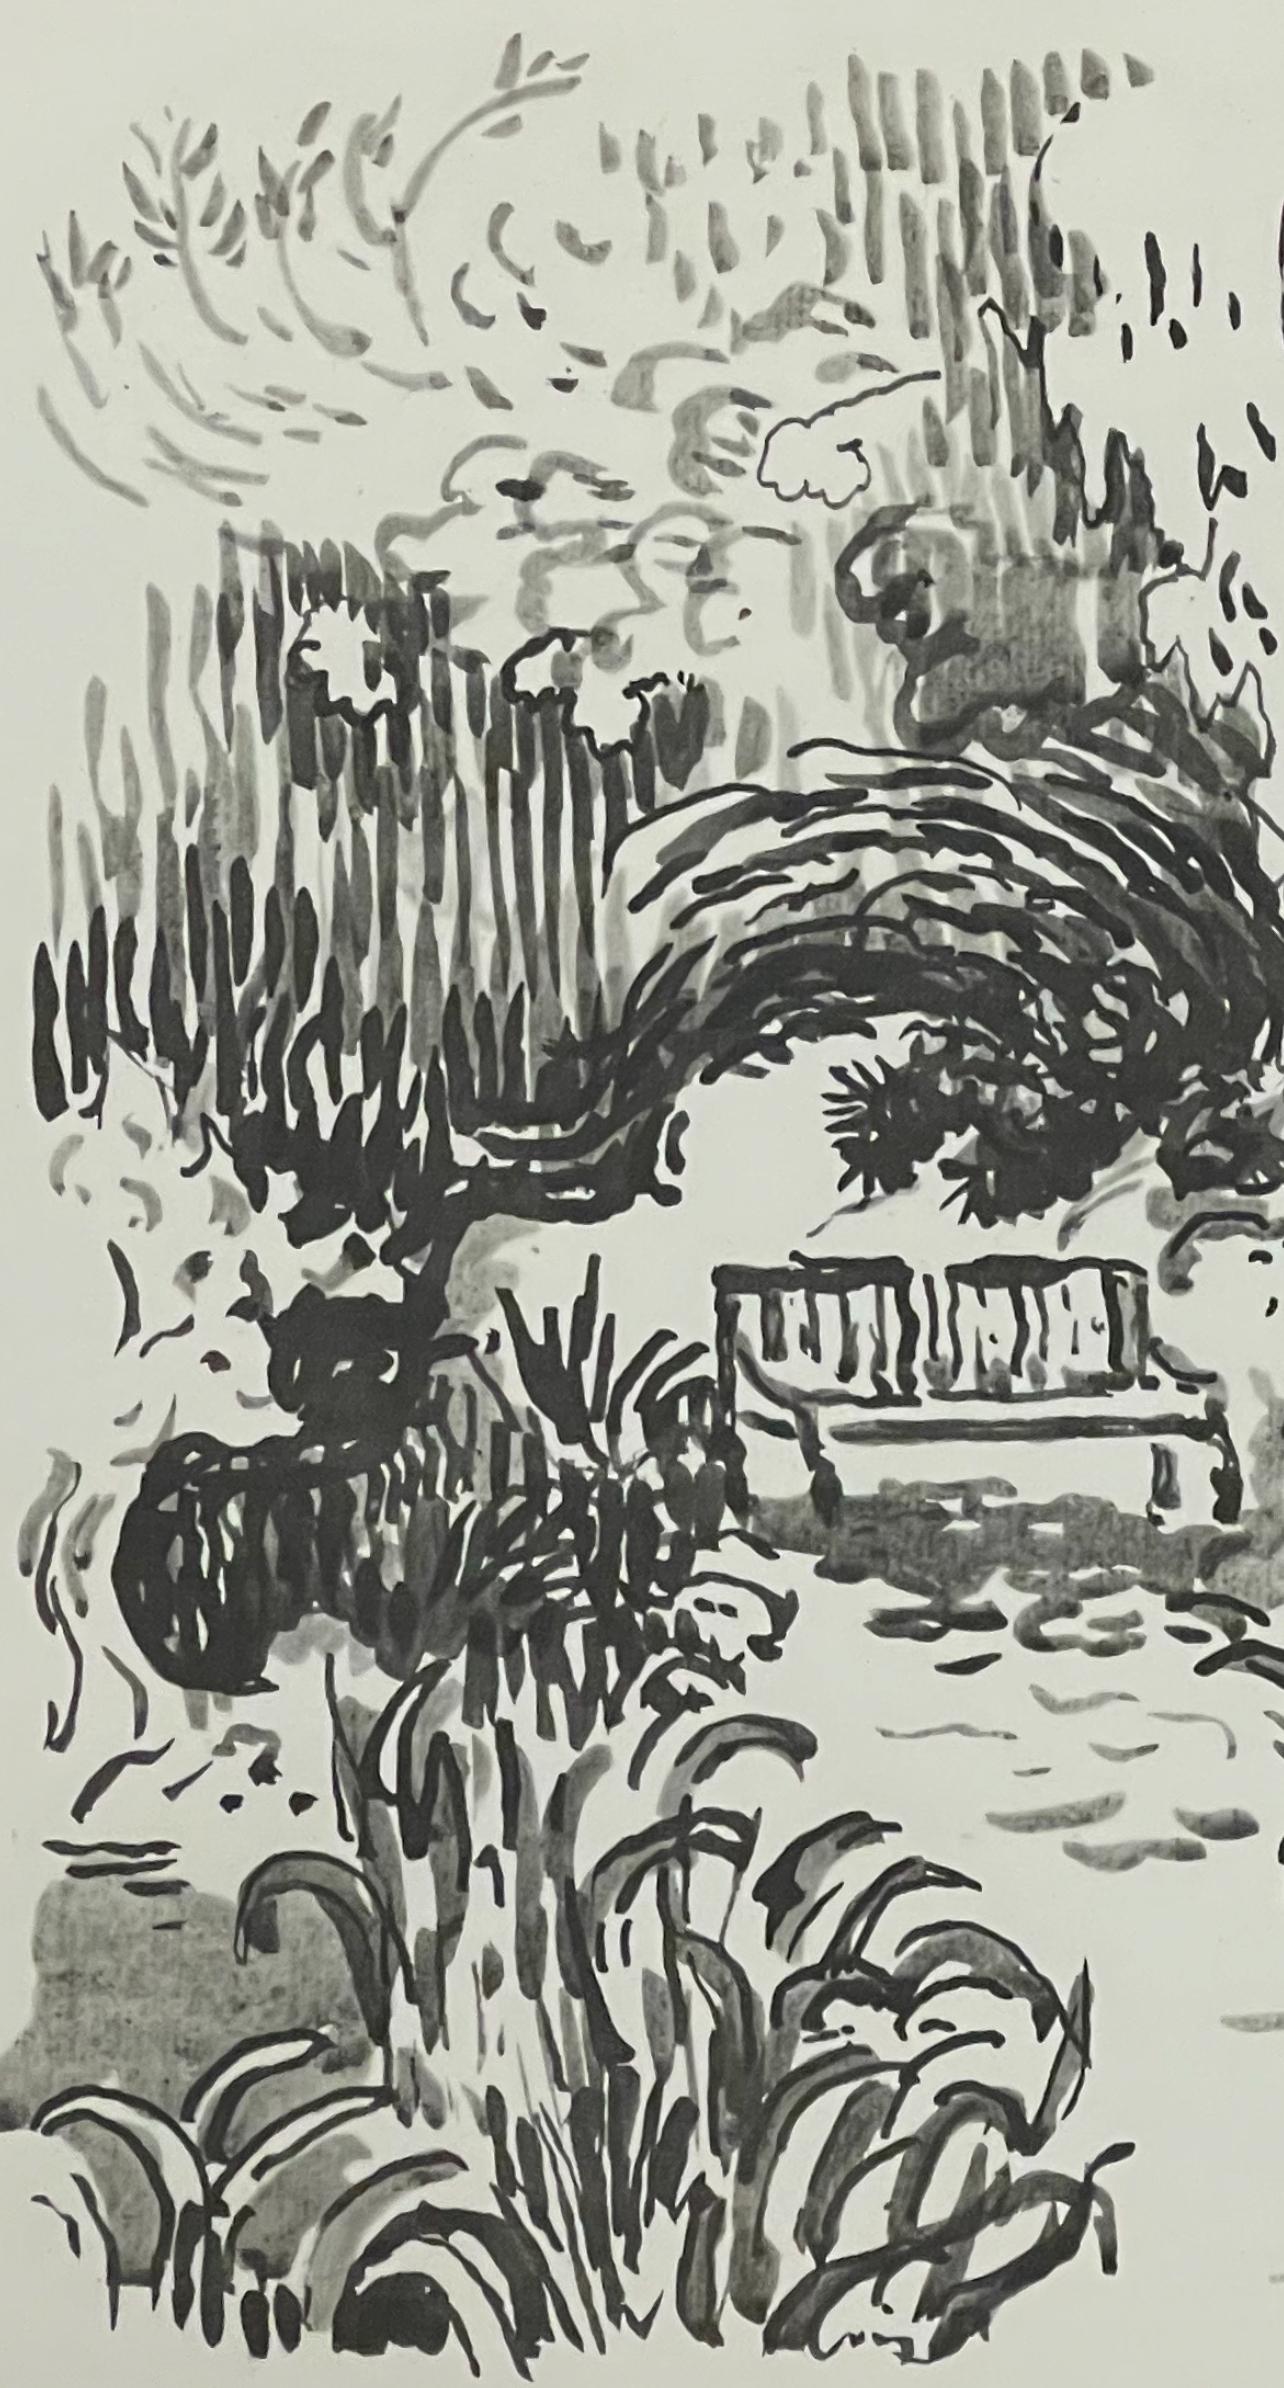 Signac, St-Tropez. Le jardin, Signac Dessins (after) - Print by Paul Signac